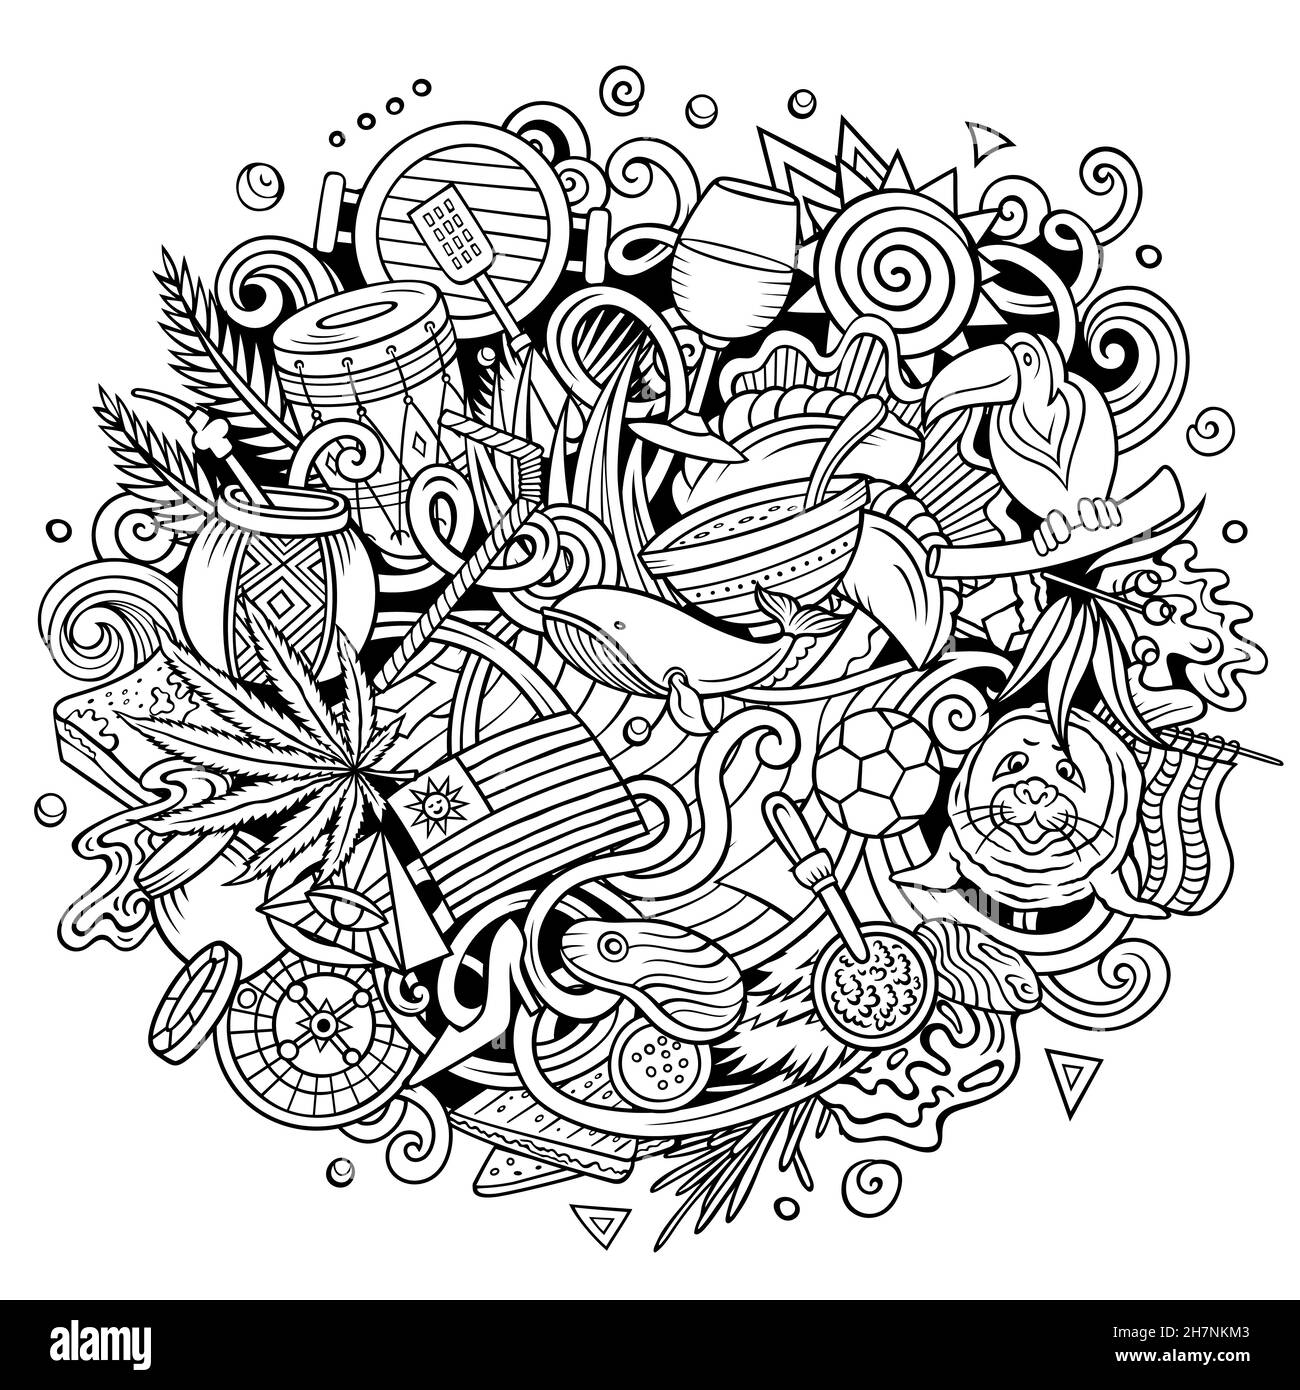 Uruguay hand drawn cartoon doodles illustration Stock Vector Image ...